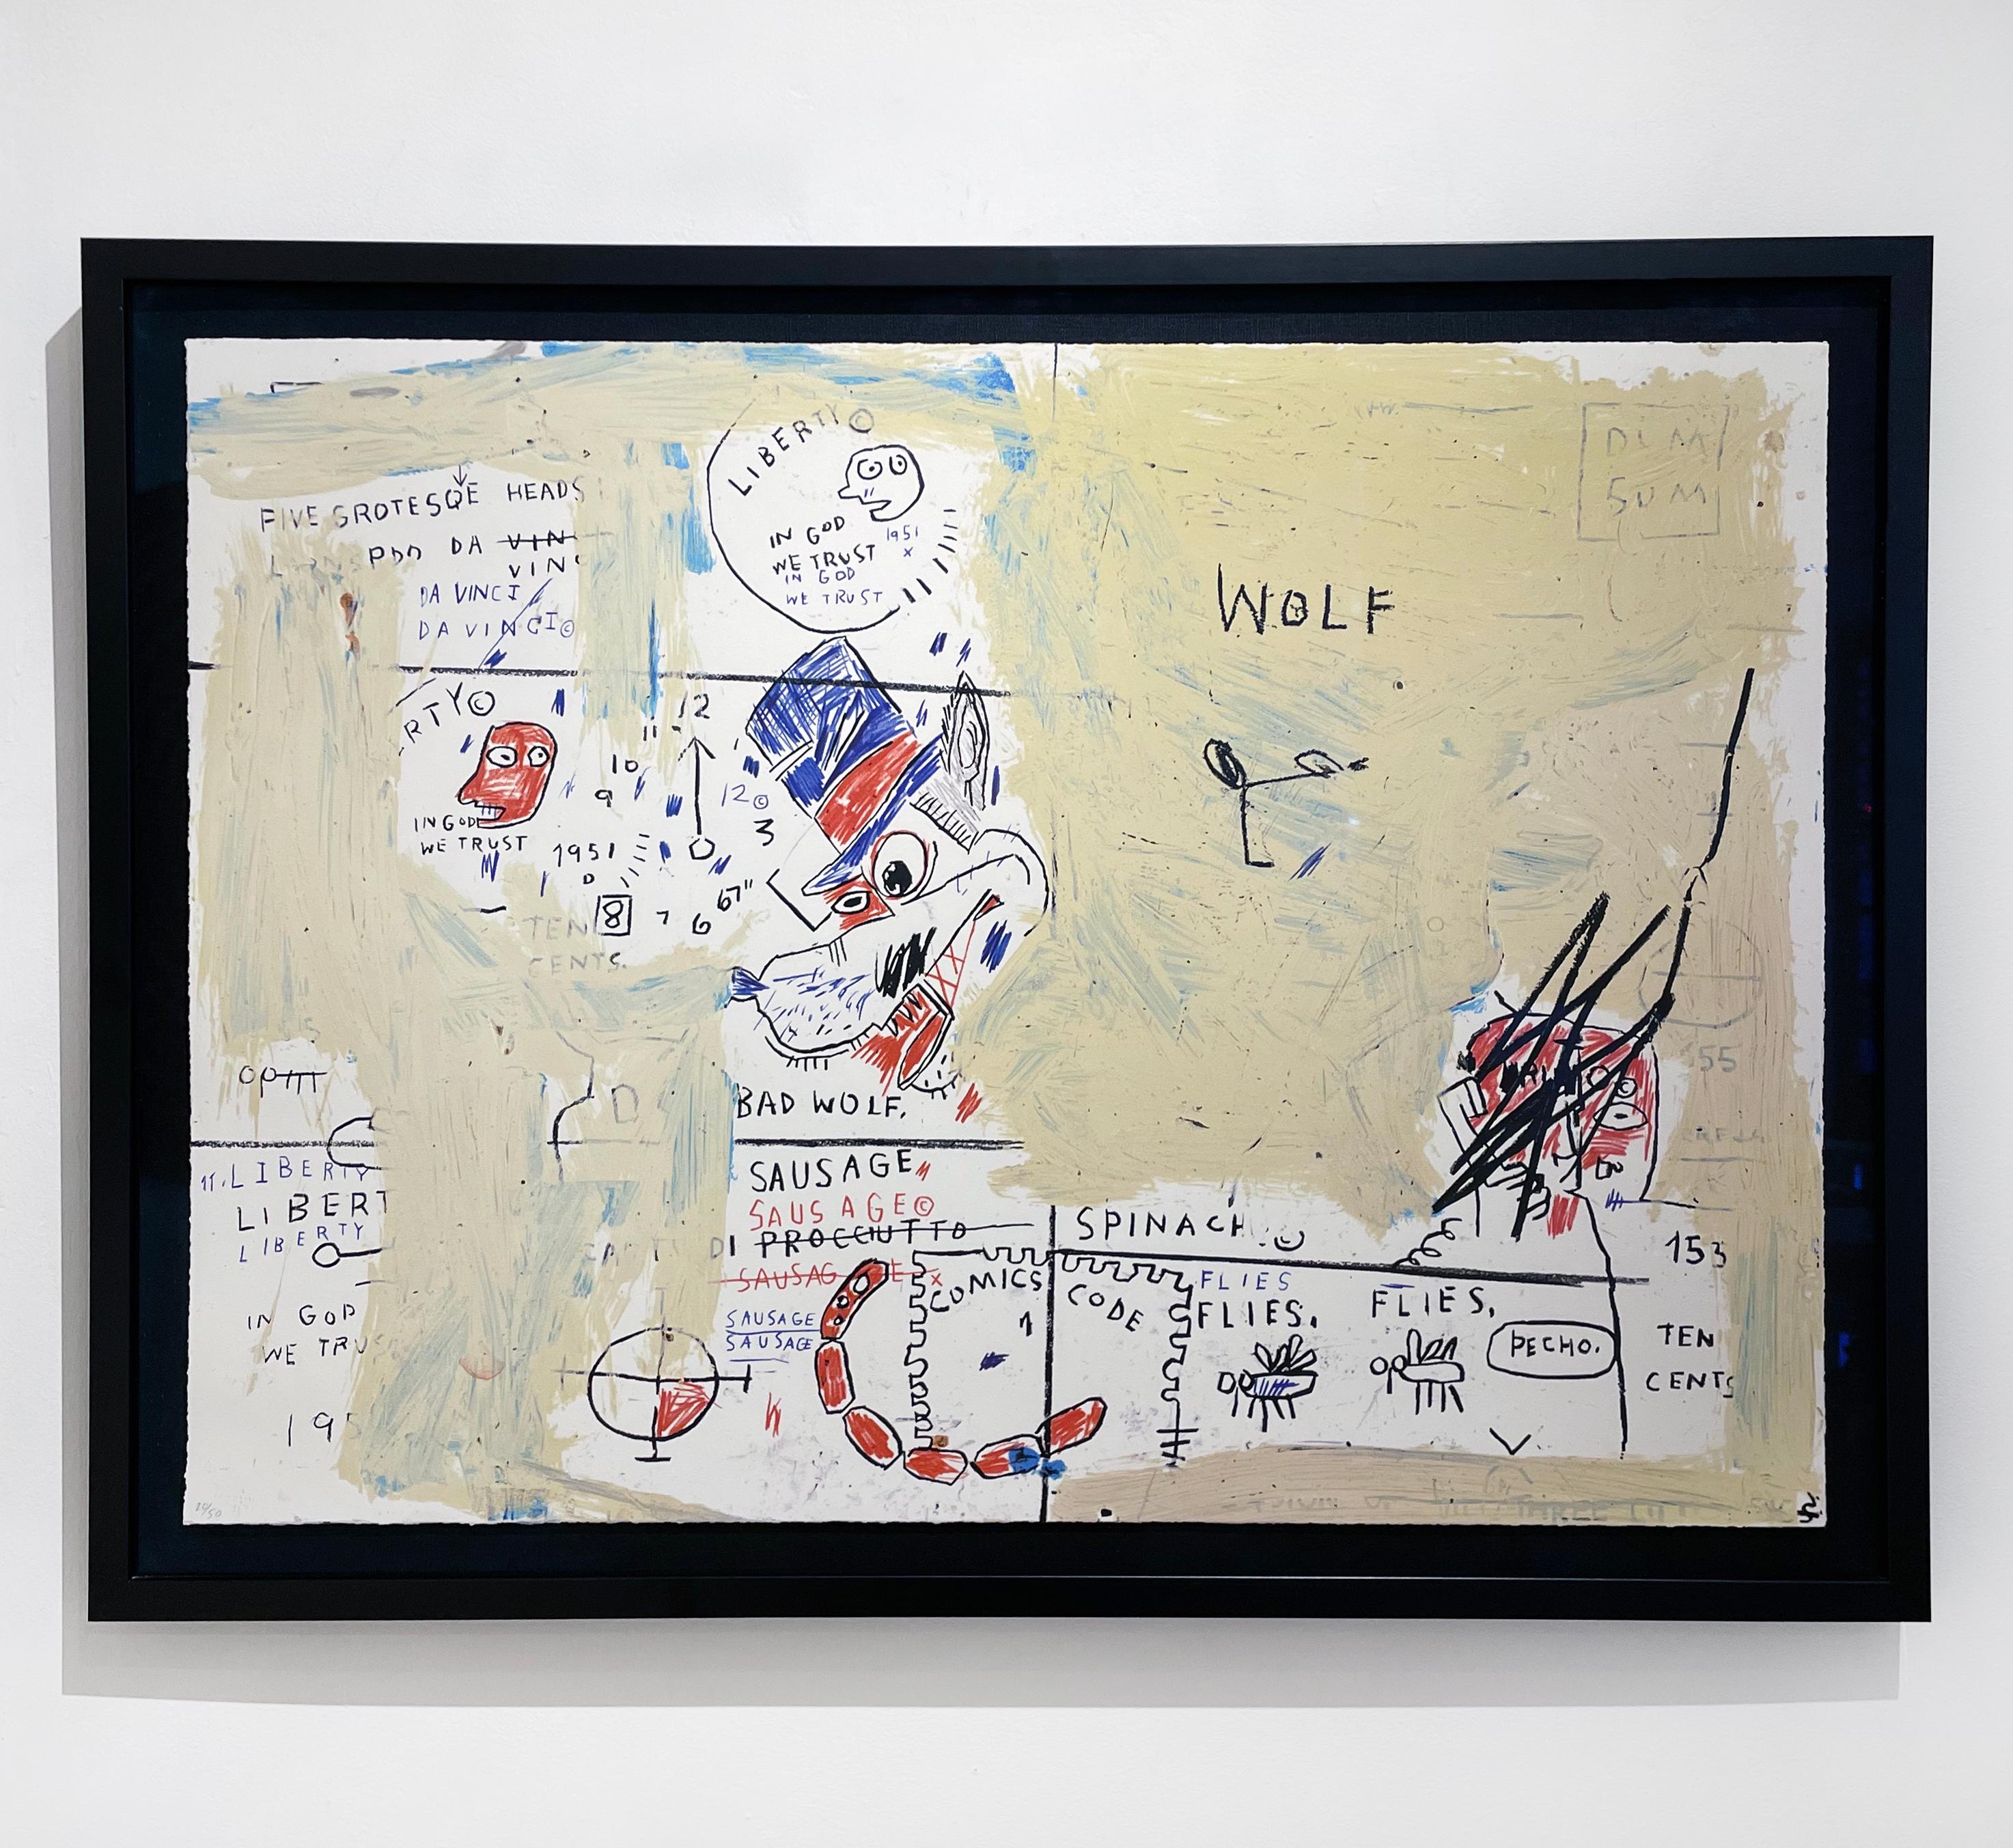 Wolf Sausage - Print by (after) Jean-Michel Basquiat